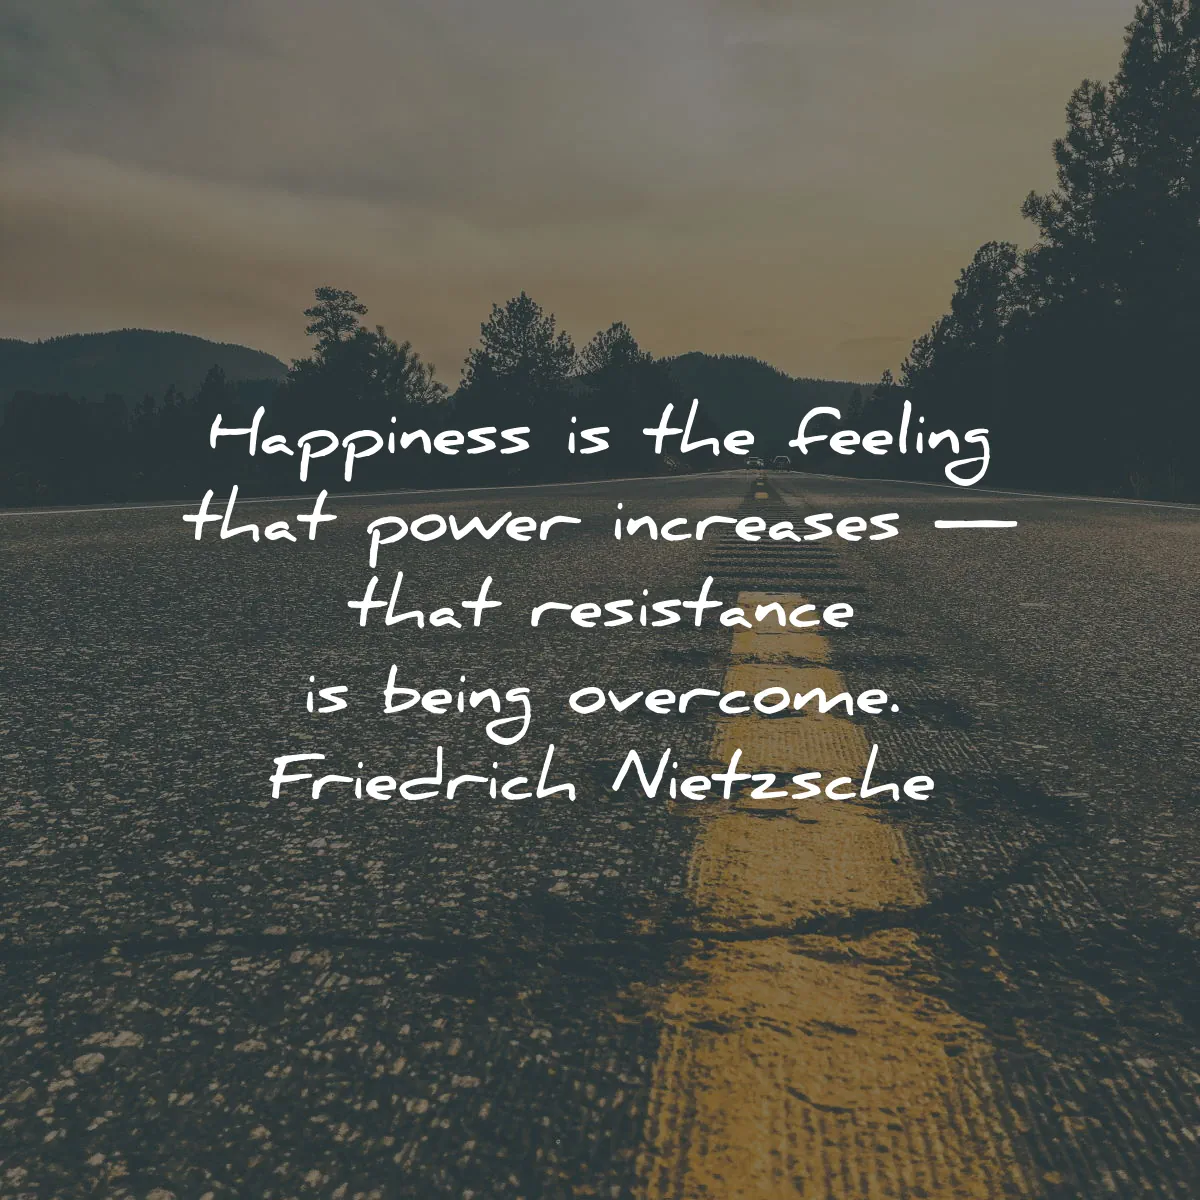 friedrich nietzsche quotes happiness feeling power increases overcome wisdom